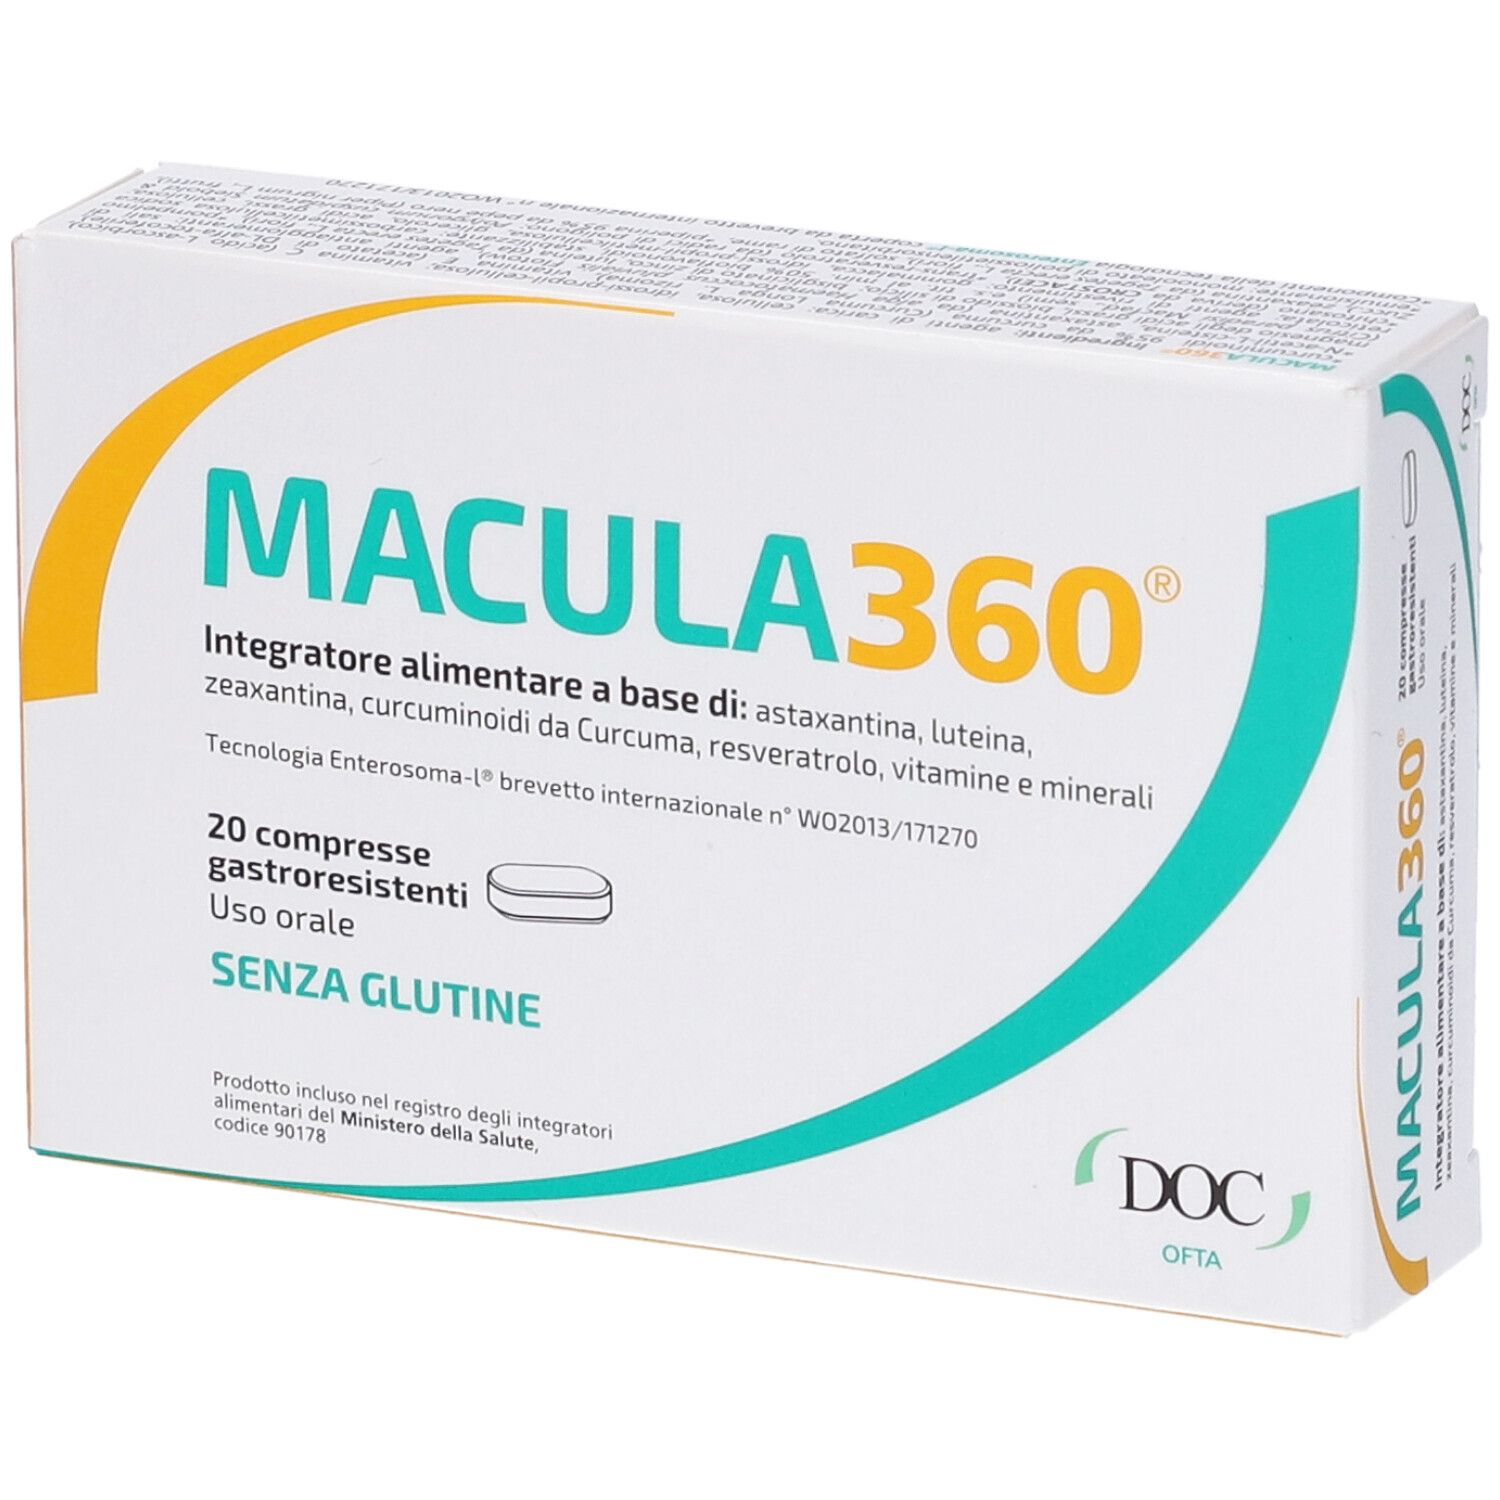 DOC MACULA360®